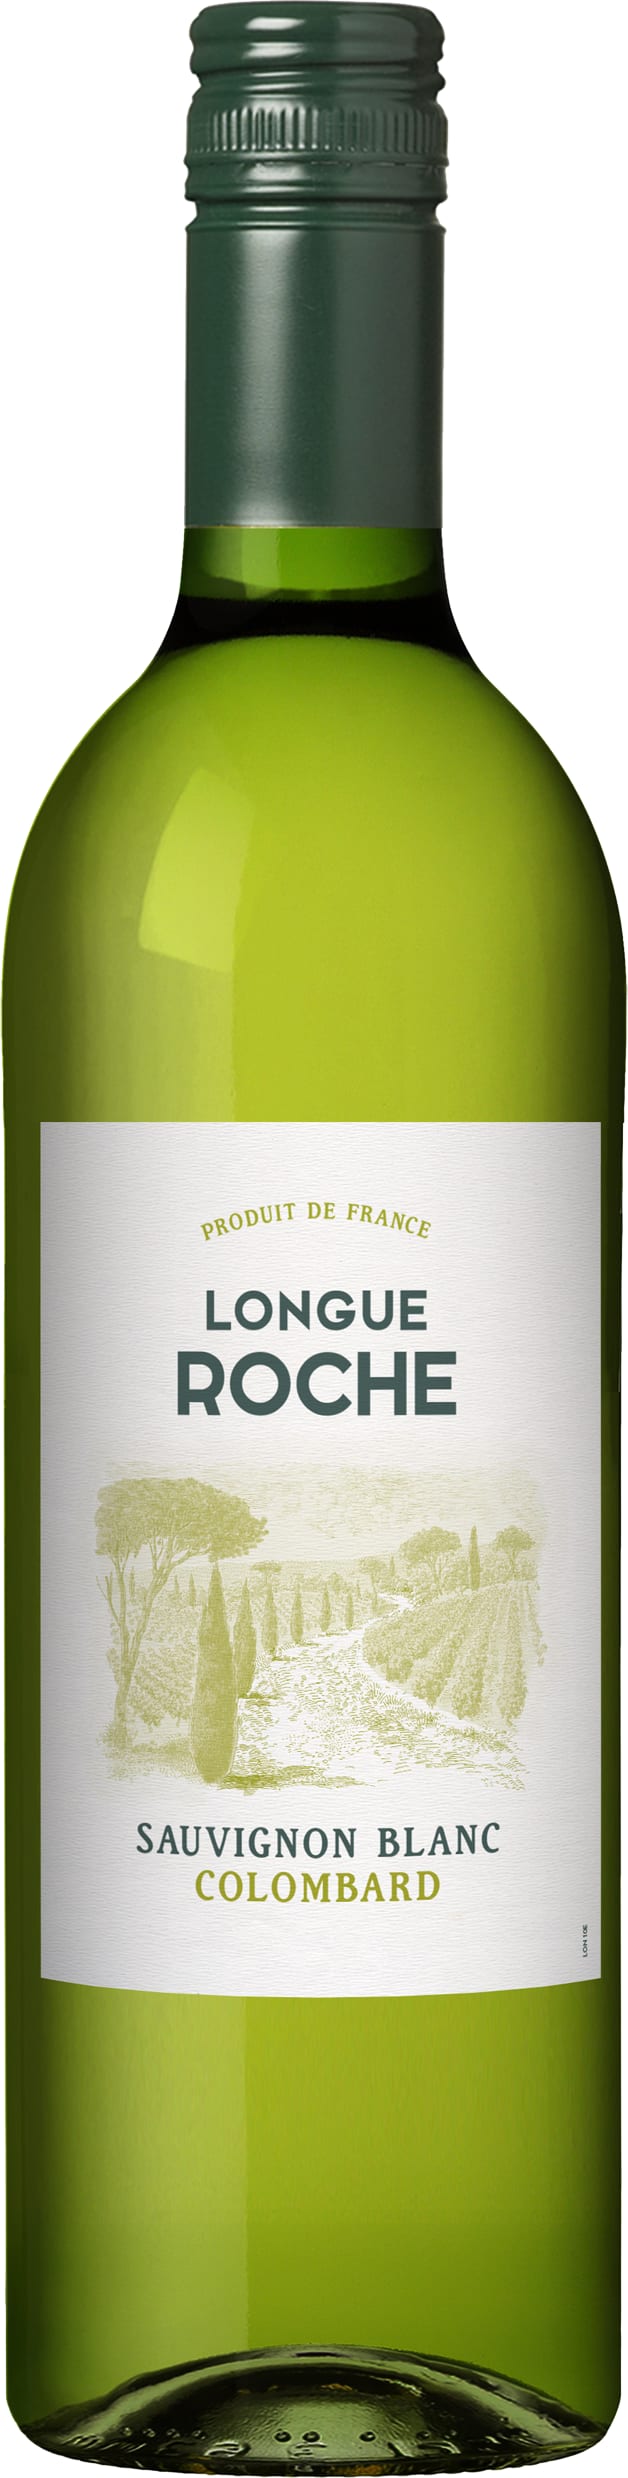 Longue Roche Sauvignon Blanc Colombard 2022 75cl - Buy Longue Roche Wines from GREAT WINES DIRECT wine shop